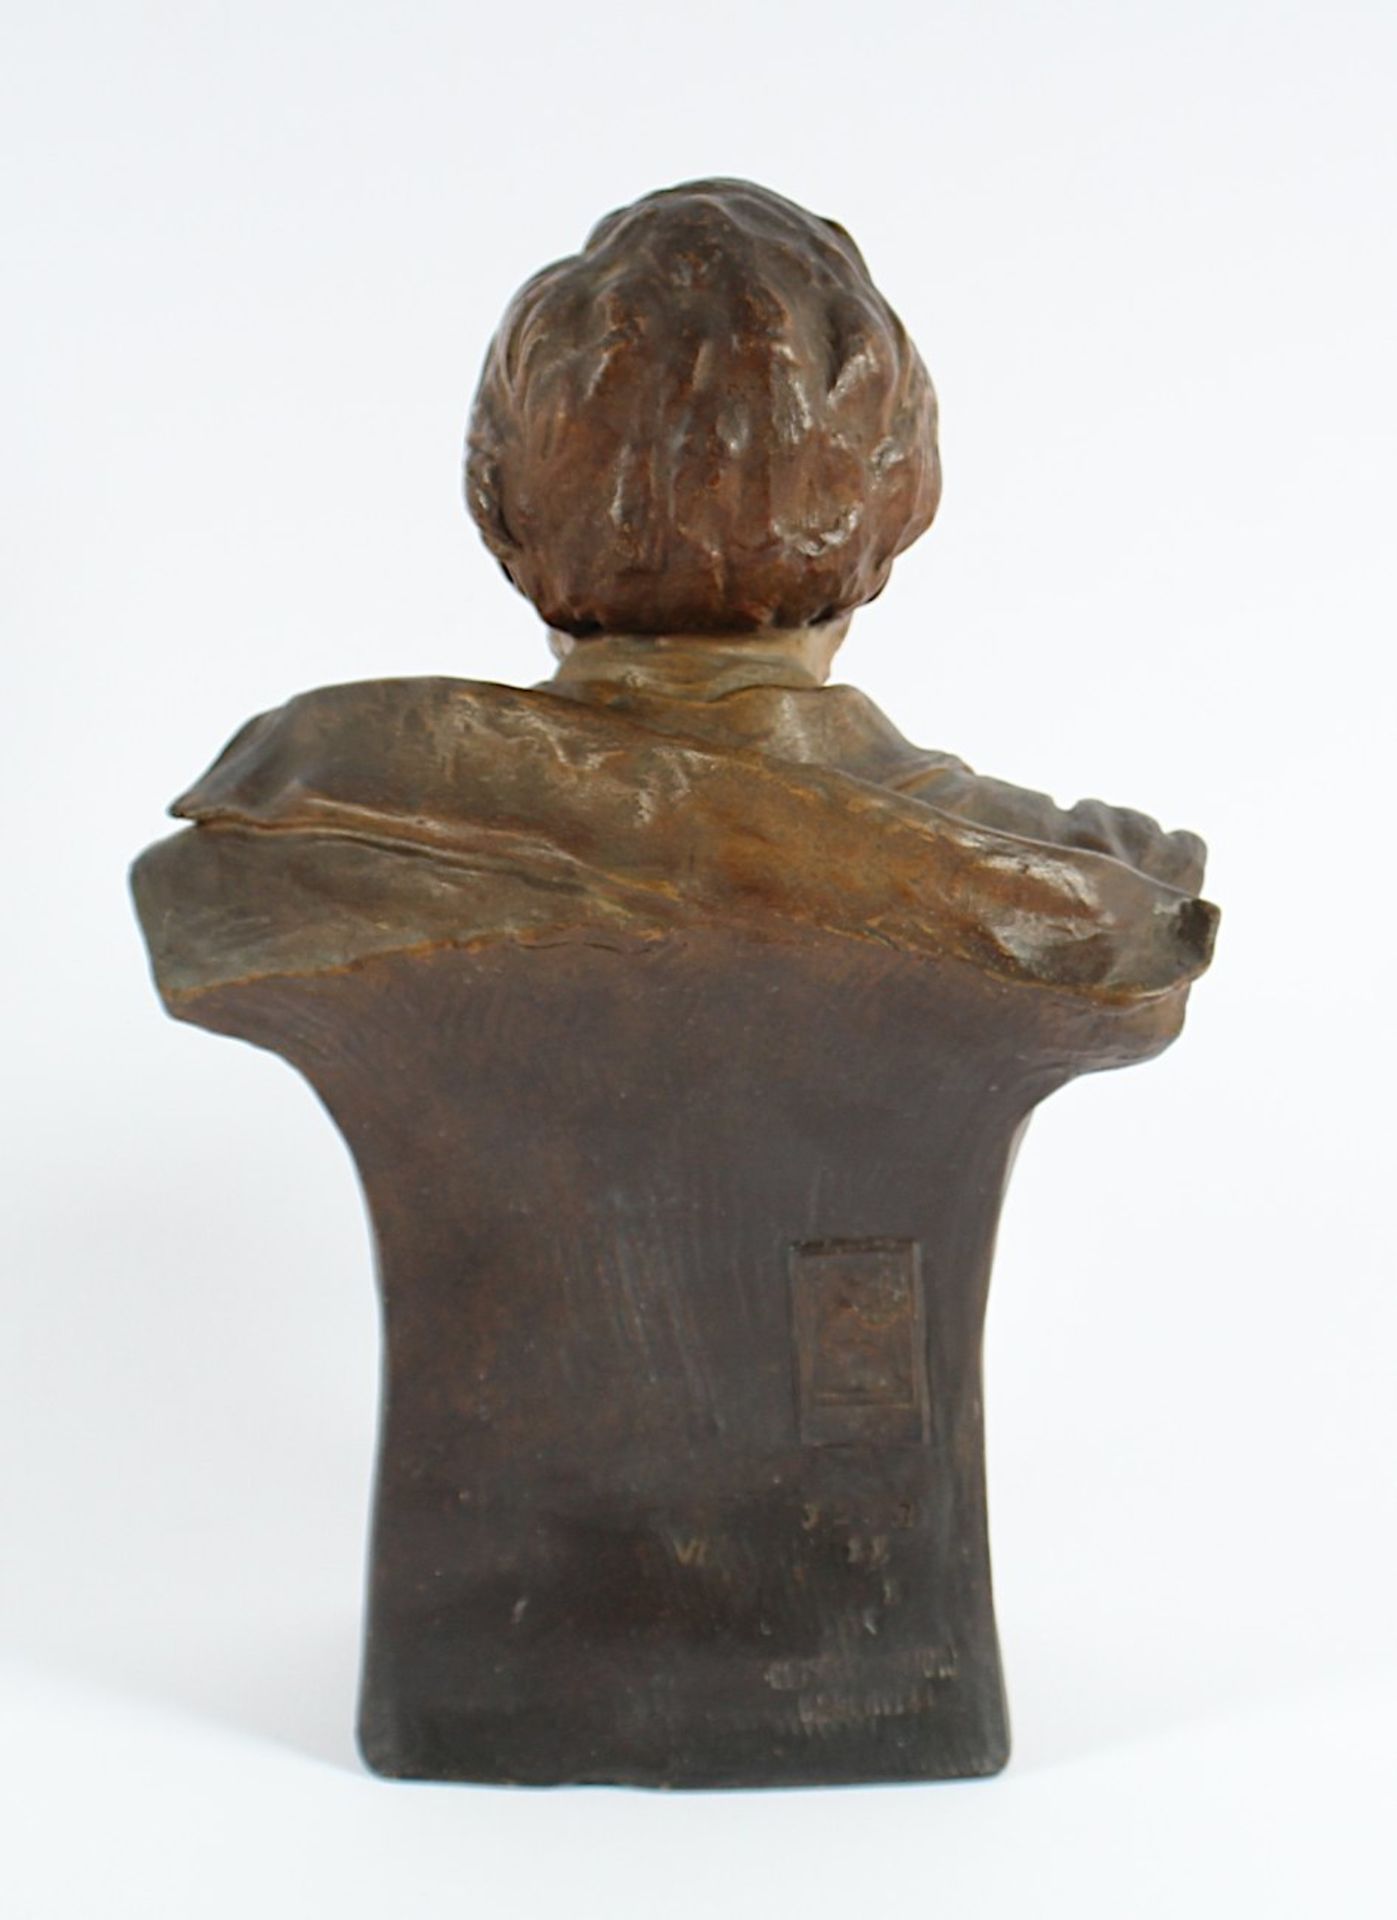 BÜSTE RICHARD WAGNER, Keramik, patiniert, H 31, bez. "Rosé", Entwurf Albert Dominique ROSÉ, - Bild 3 aus 5